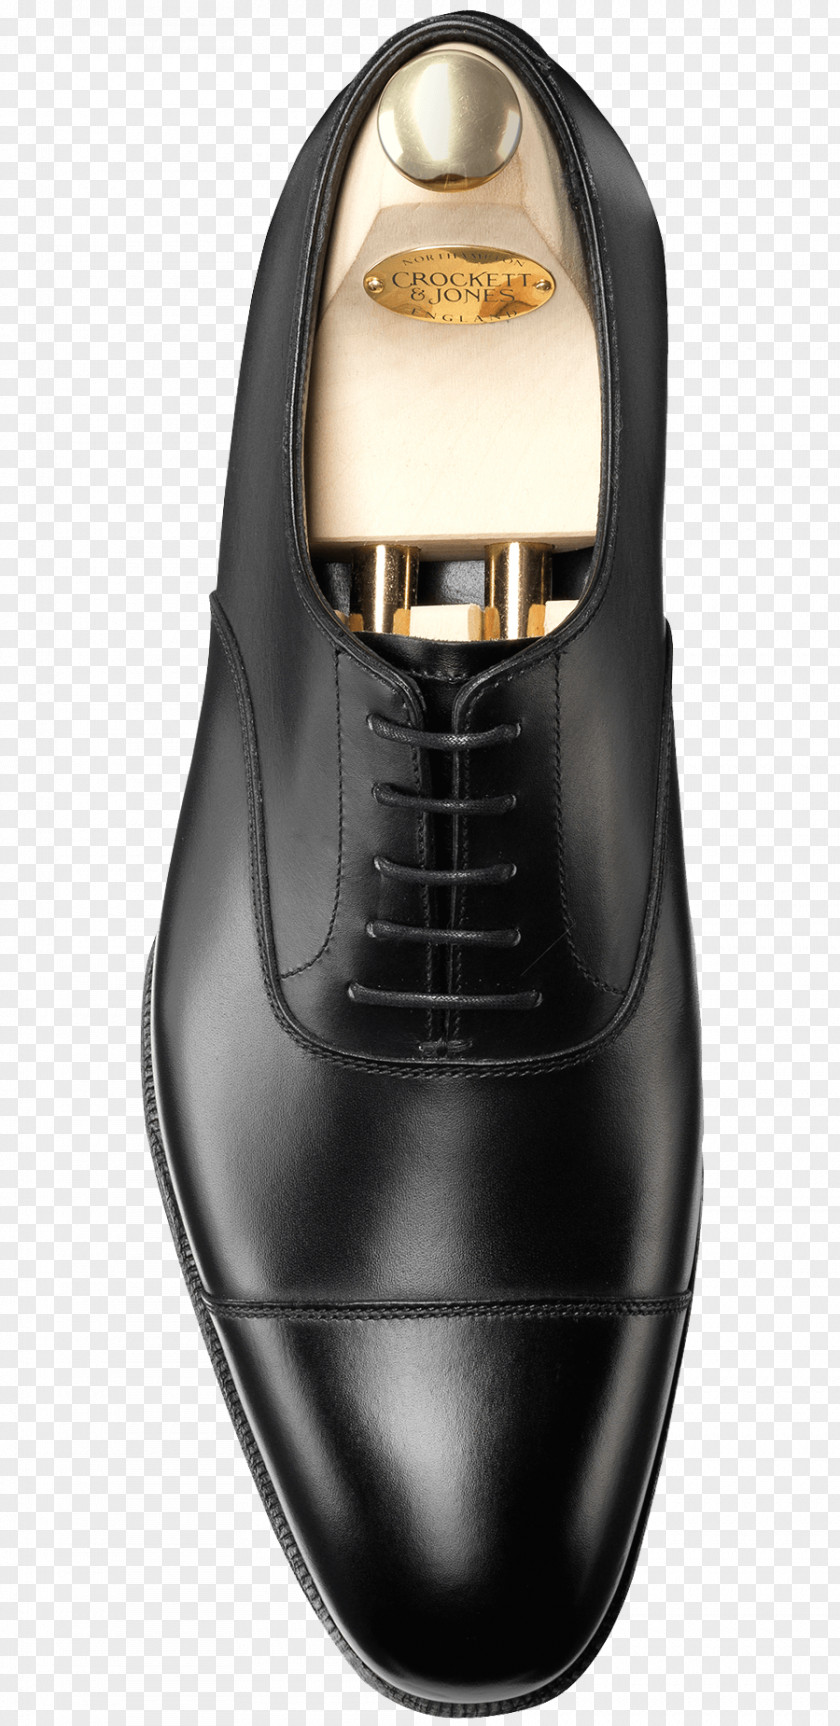 Audley Oxford Shoe Slip-on Crockett & Jones Brogue PNG